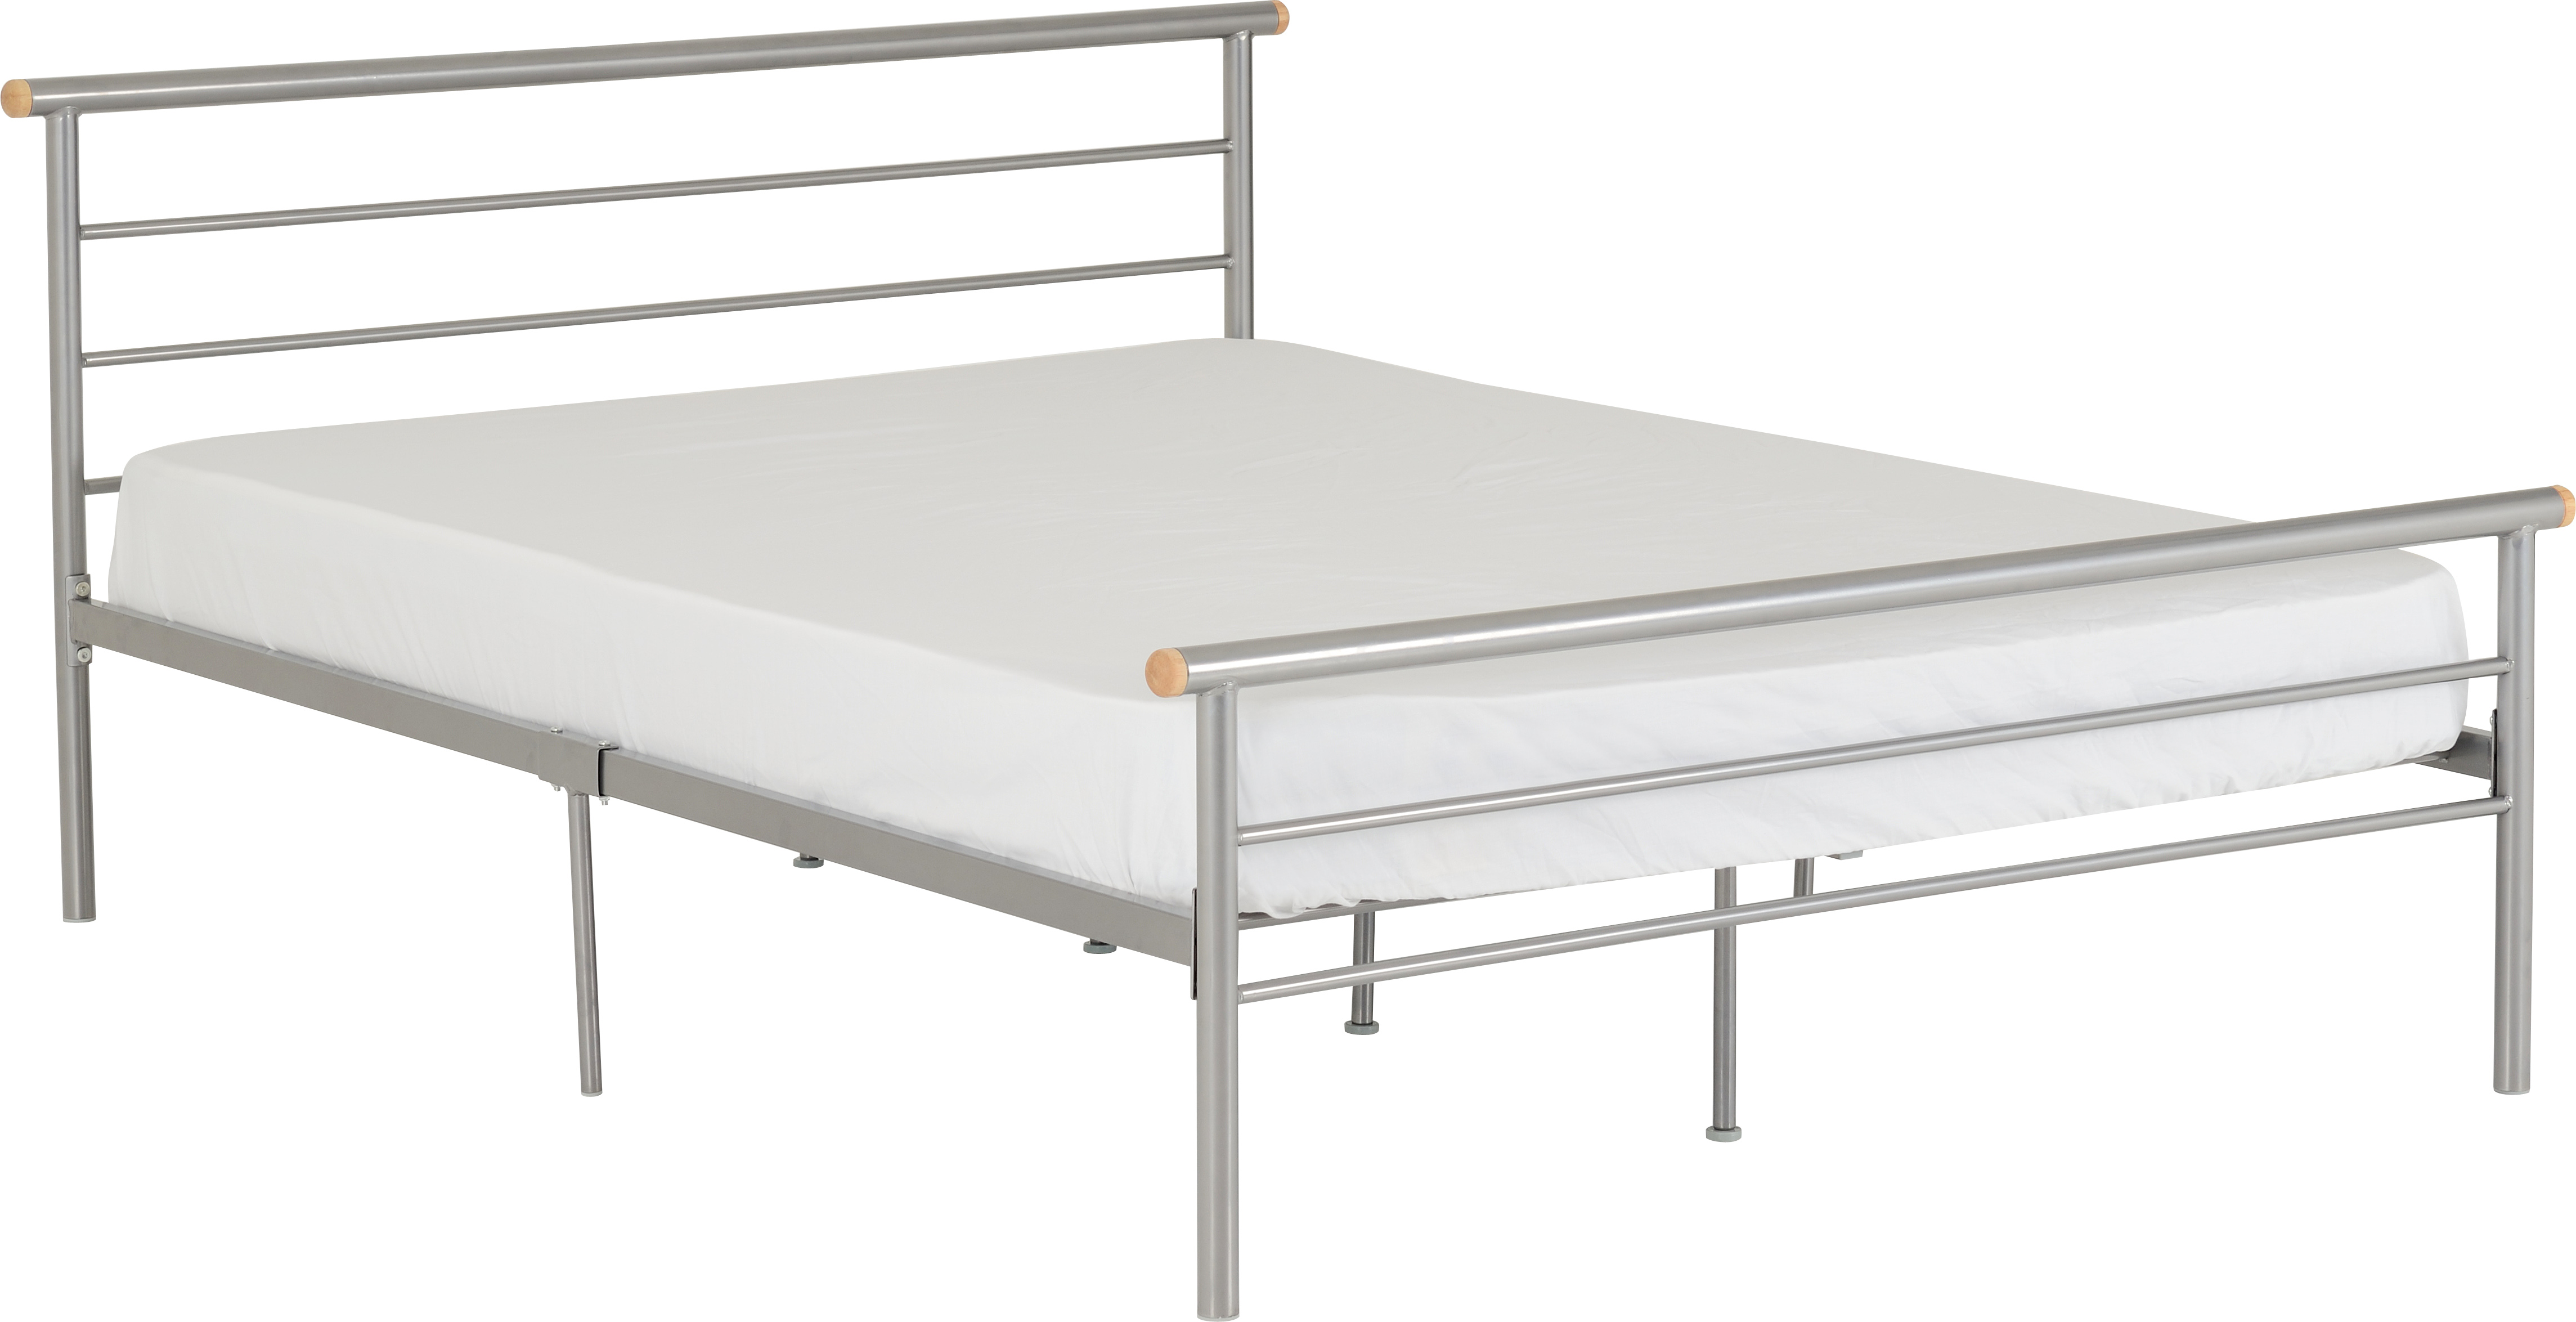 Seconique Orion 4 Feet Bed 999.95 x 1329.95 x 139.94 cm Silver 